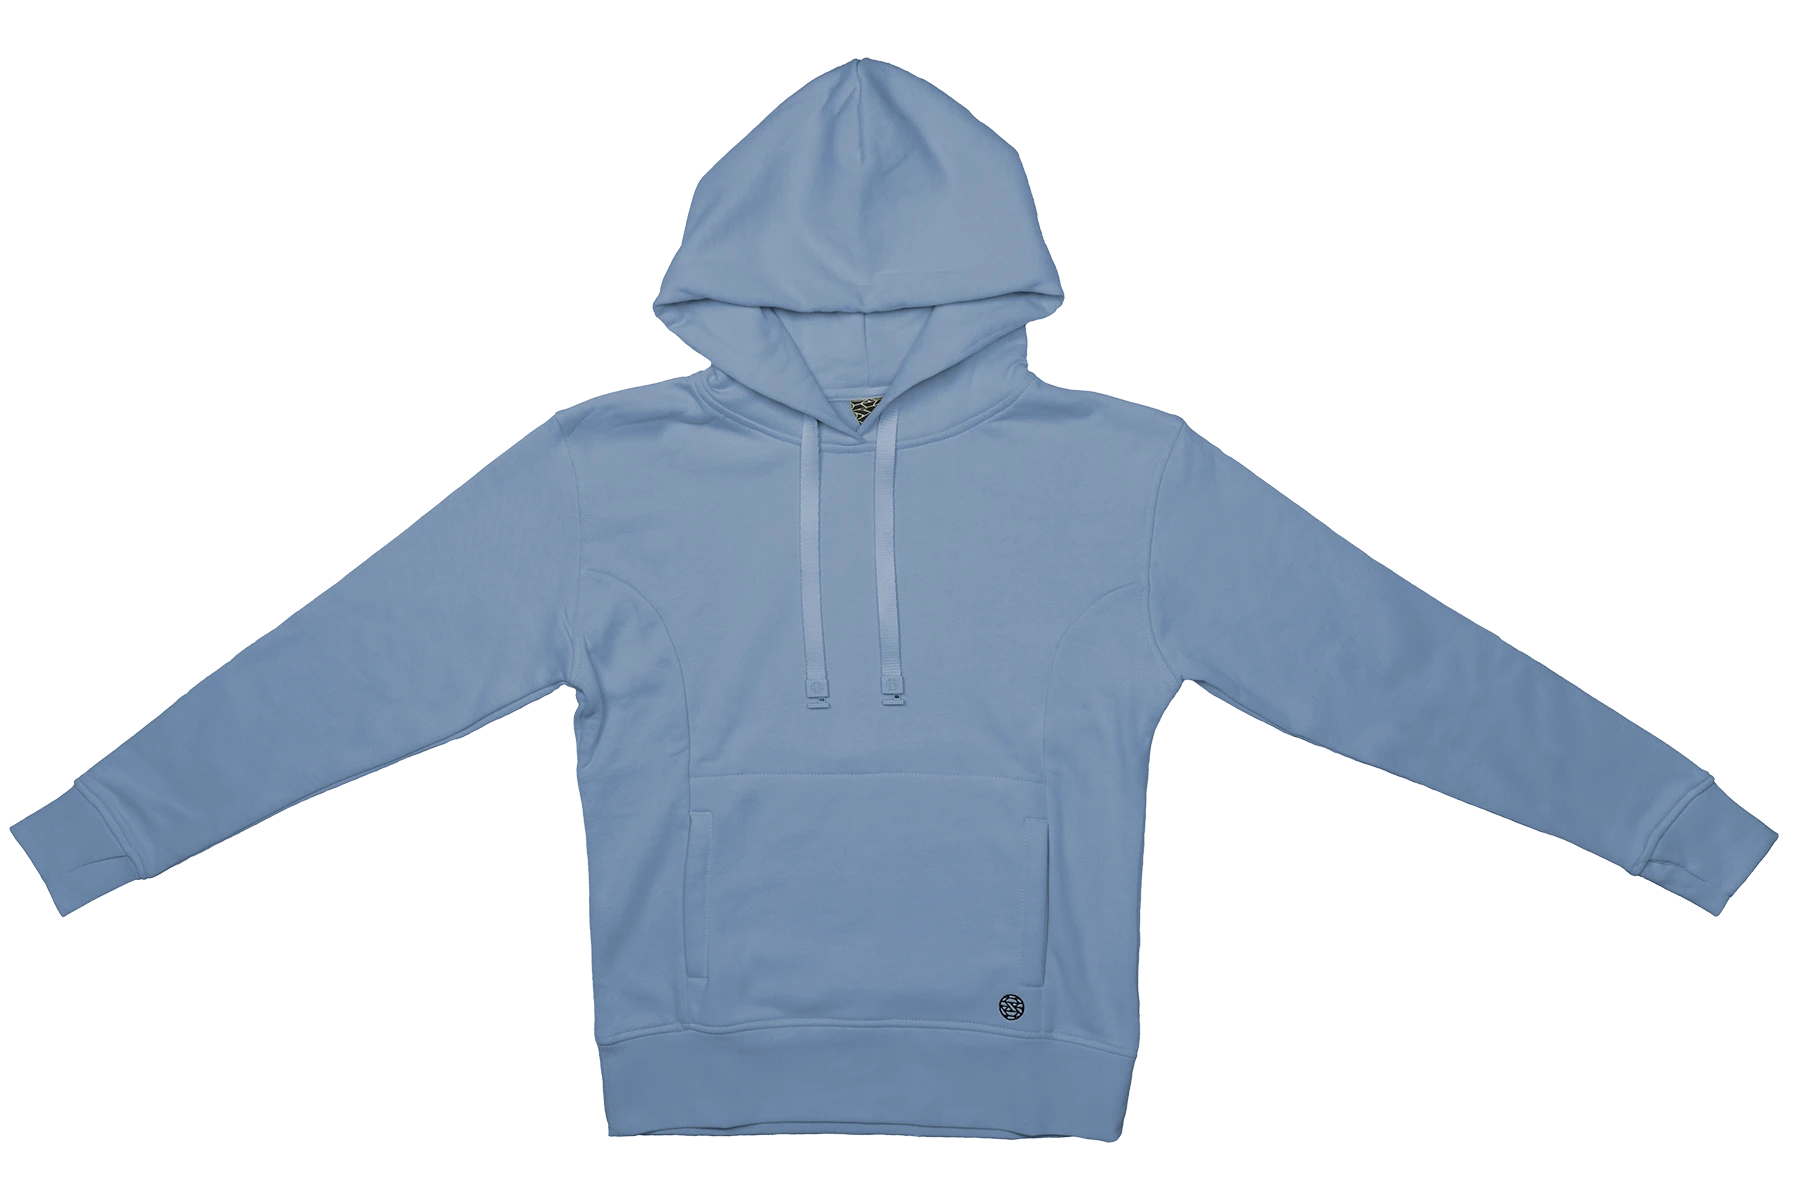 ZOX hoodie with kangaroo pocket. Shown in grayish blue/